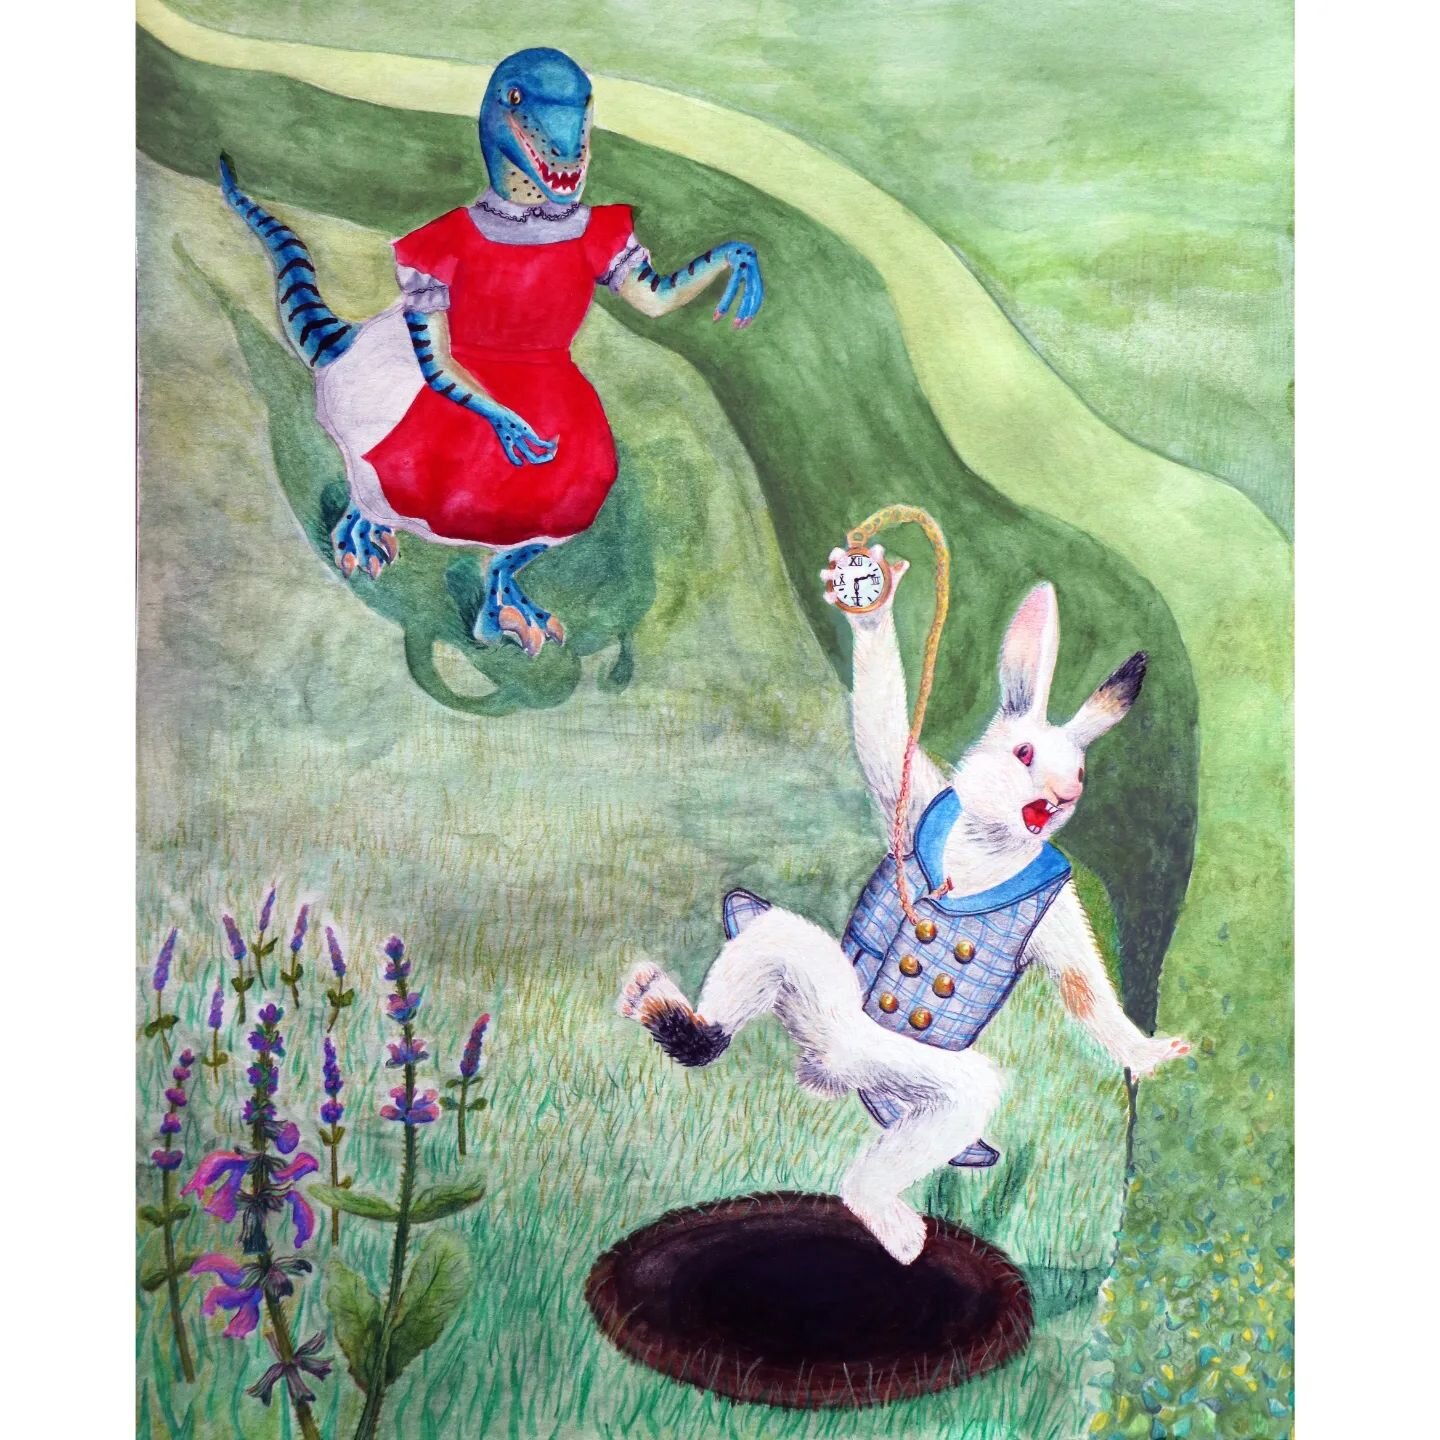 Aliciraptor running after the White Rabbit without any ulterior motive 😇😅 
#aliceinwonderland #dinosaurart #incorrectdinosaurs #handdrawnillustration